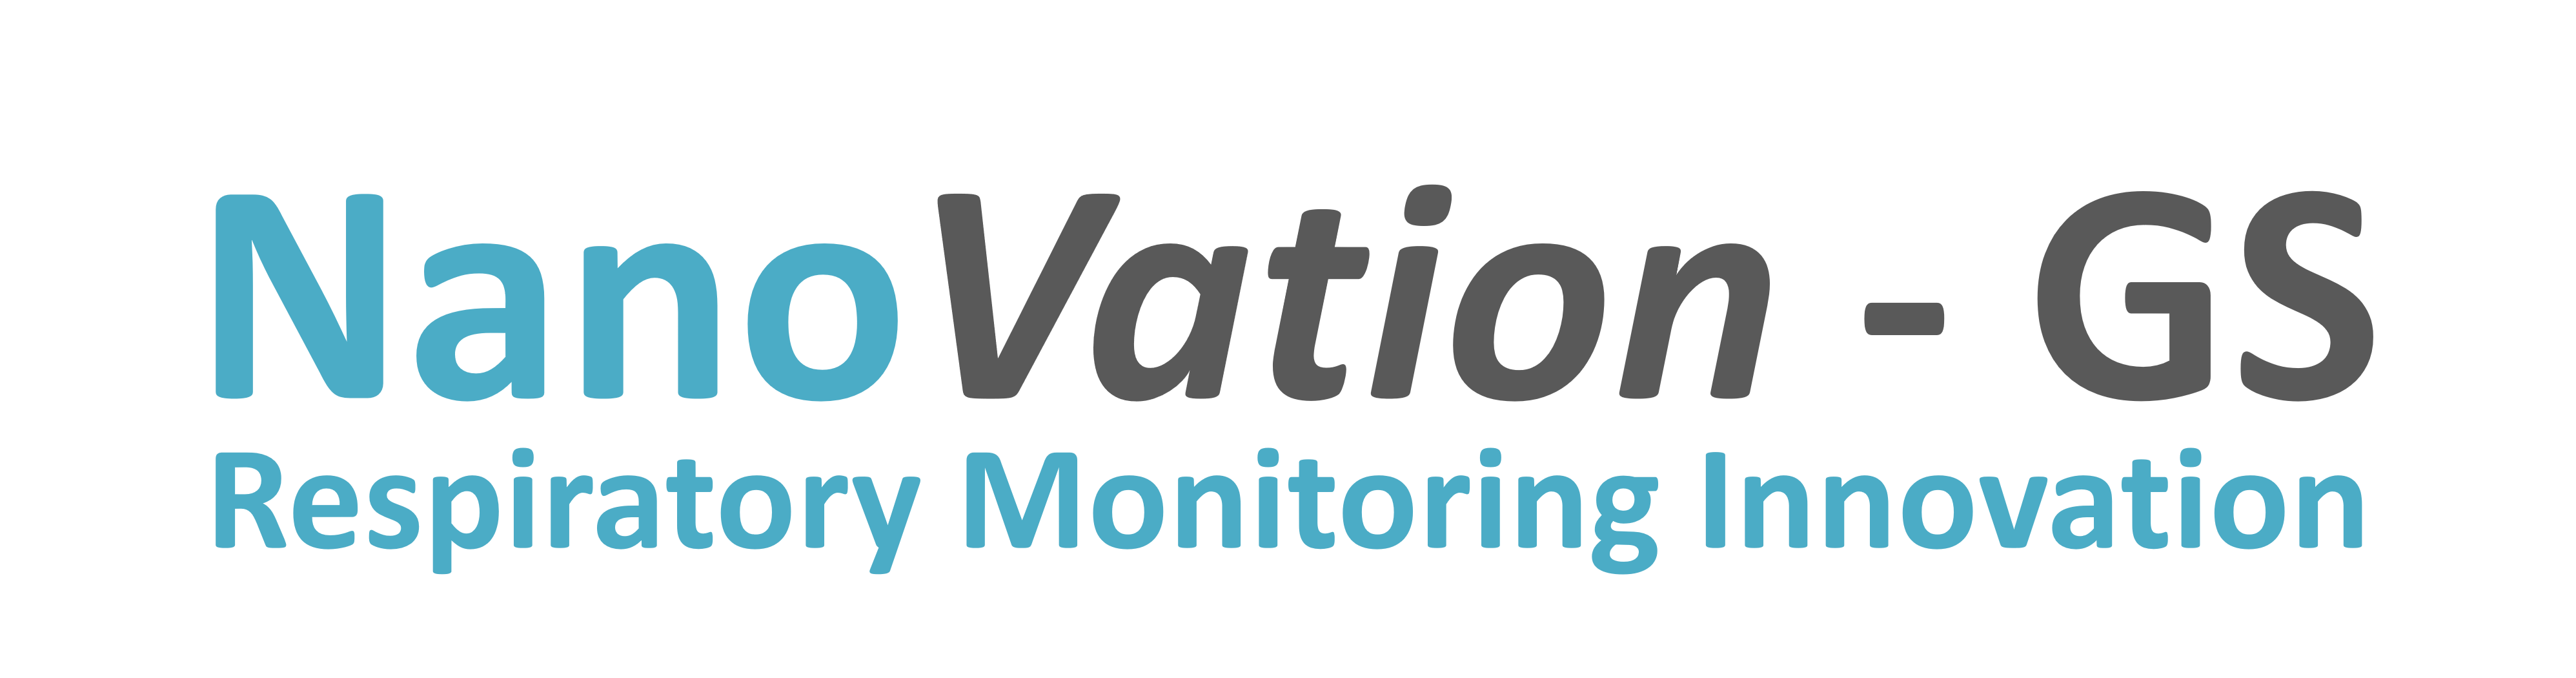 NanoVation-GS logo